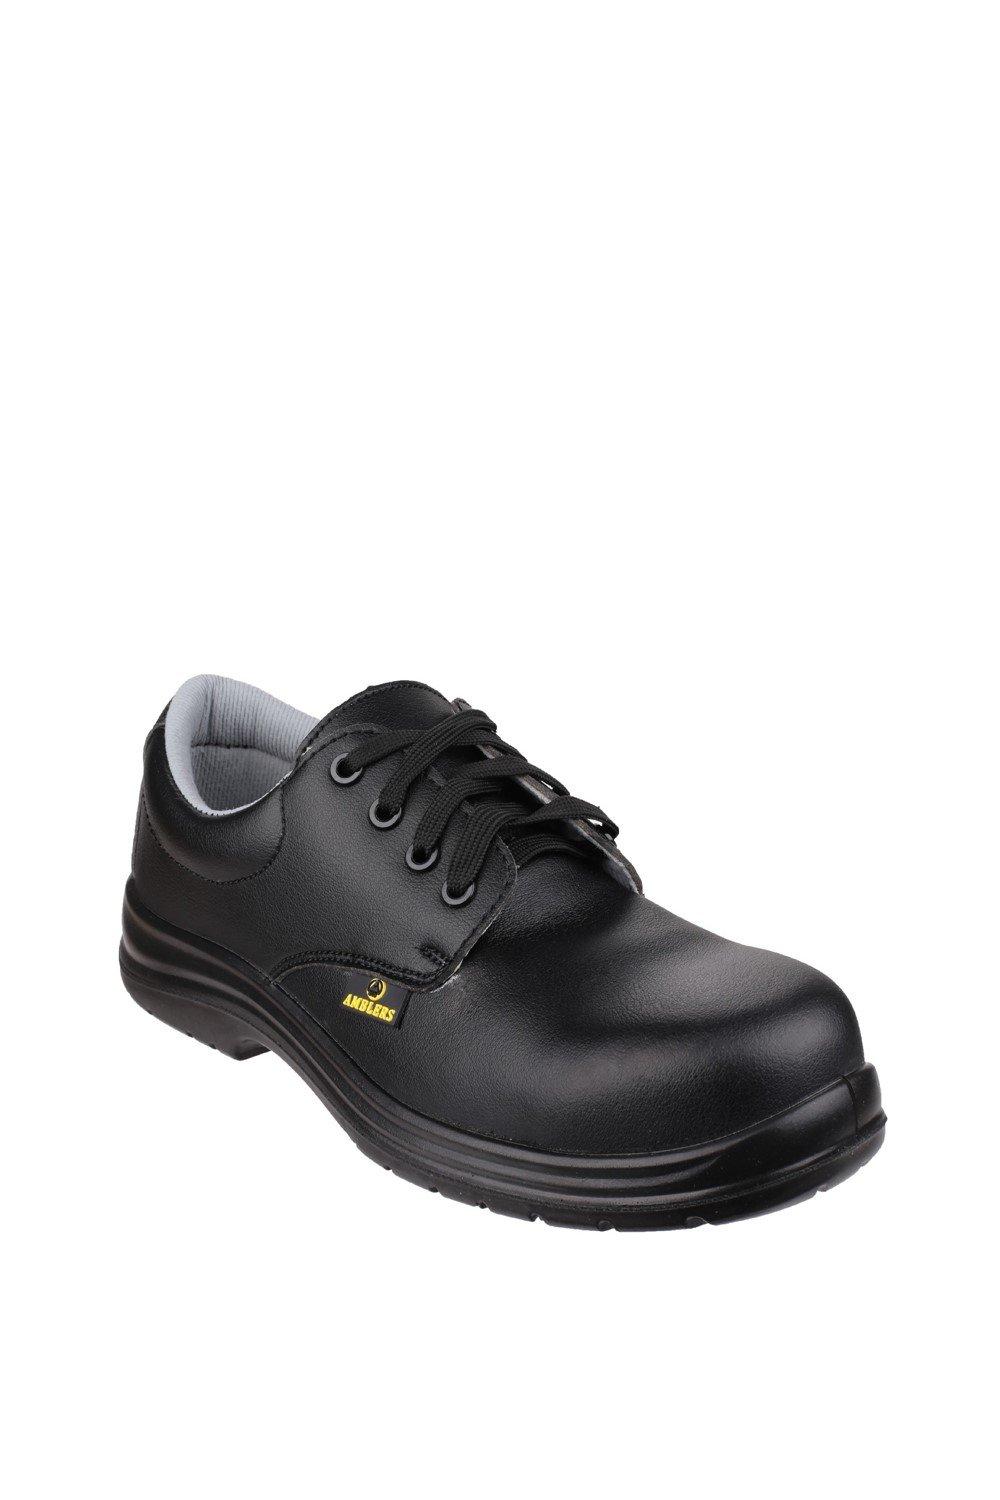 Защитная обувь 'FS662' Amblers Safety, черный 4pcs lot src 05vdc sh src 12vdc sh src 24vdc sh songle power relay 8pin 5v 12v 24v 1a pcb type